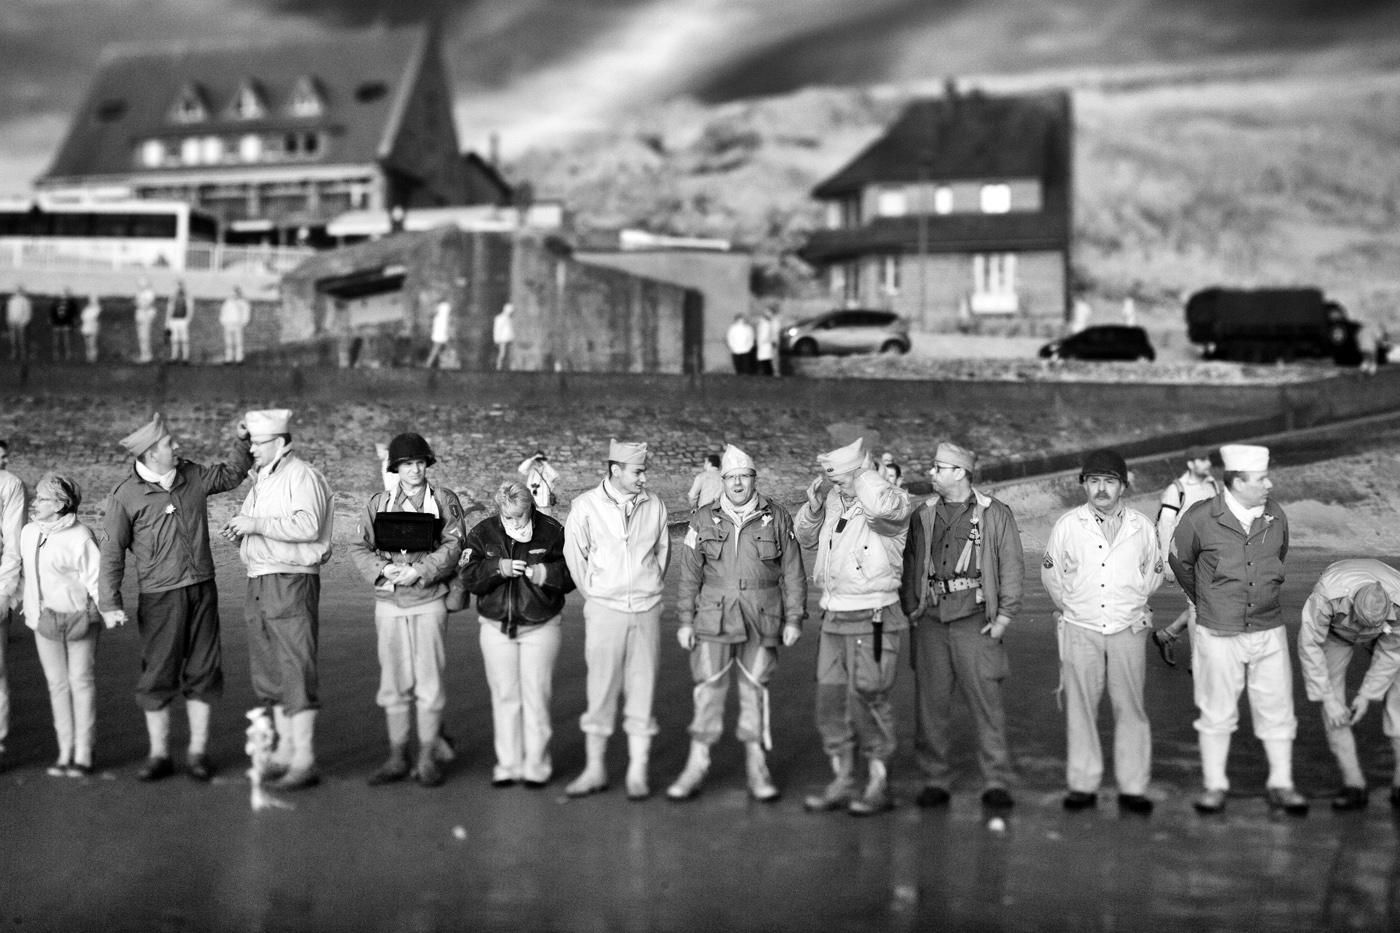 D-Day+70 Years: Omaha Beach salute to the veterans  : D-Day: the Men, the Beaches : David Burnett | Photographer